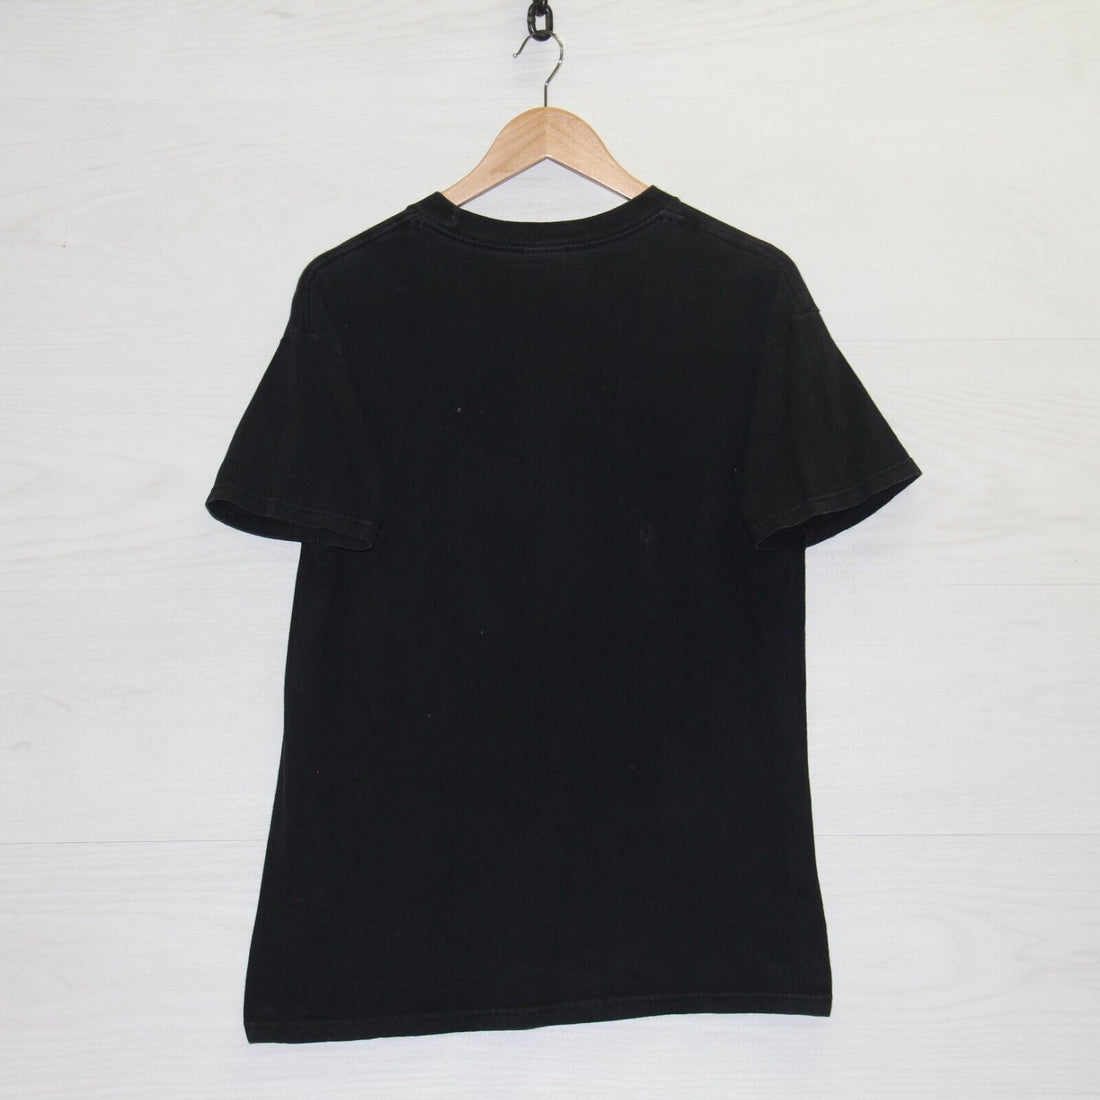 Vintage System of a Down BYOB T-Shirt Size Medium 2005 Black Band Tee